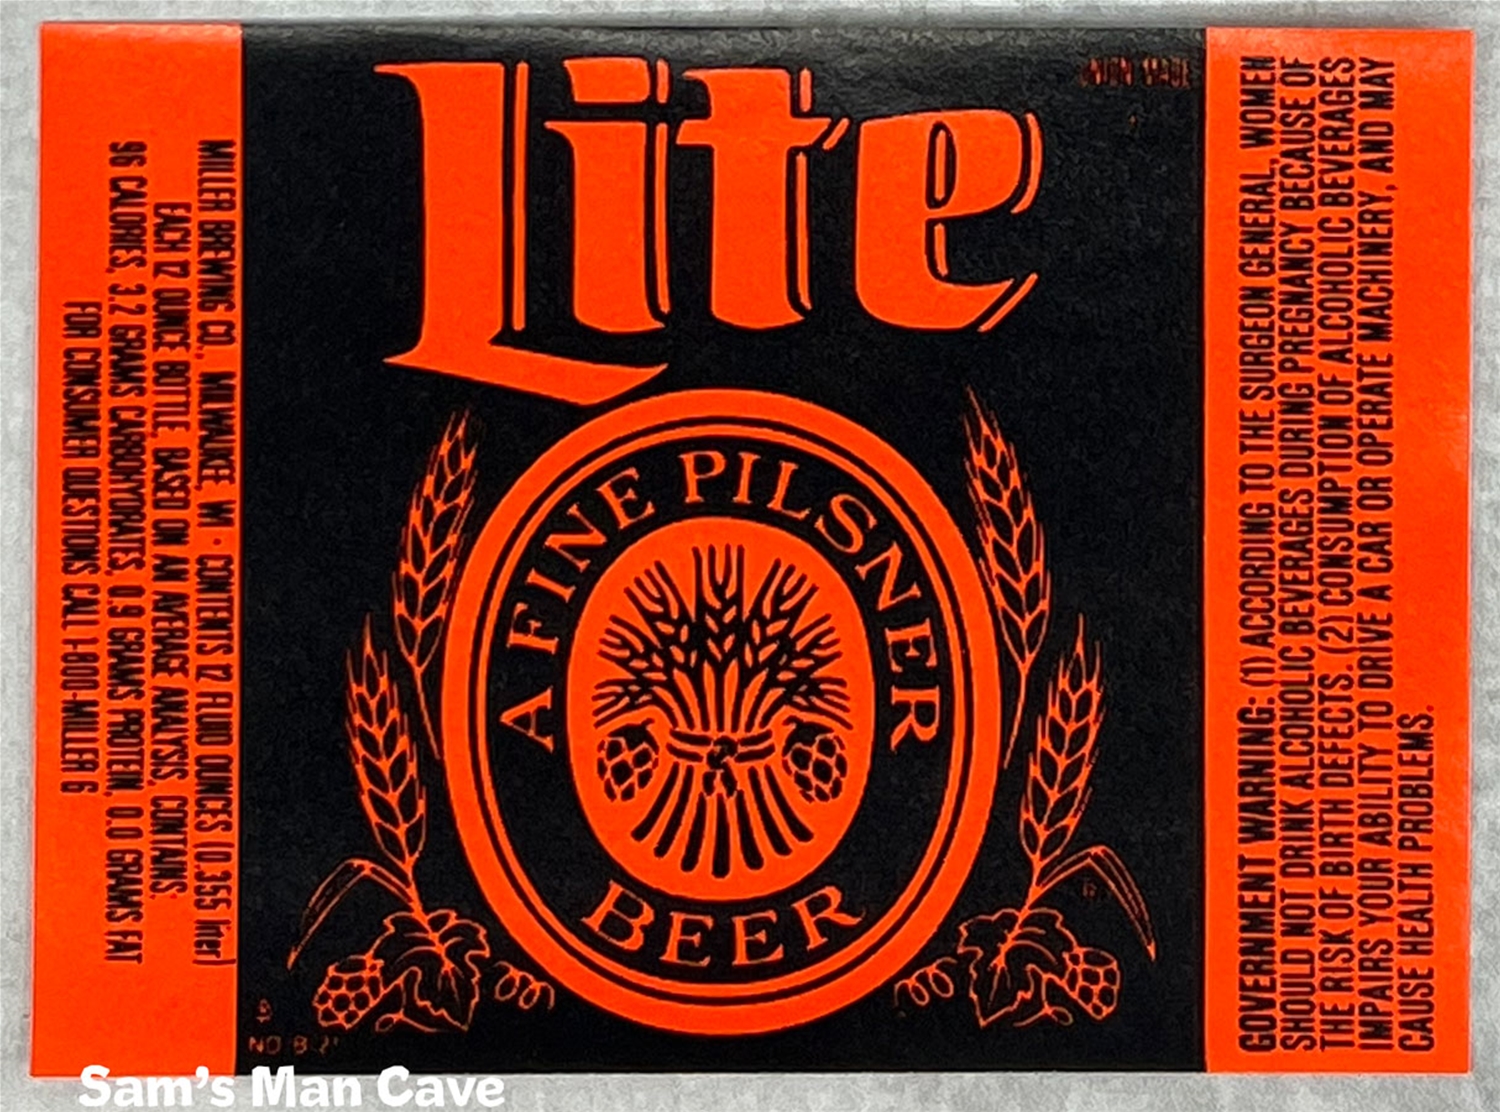 Lite Beer Label